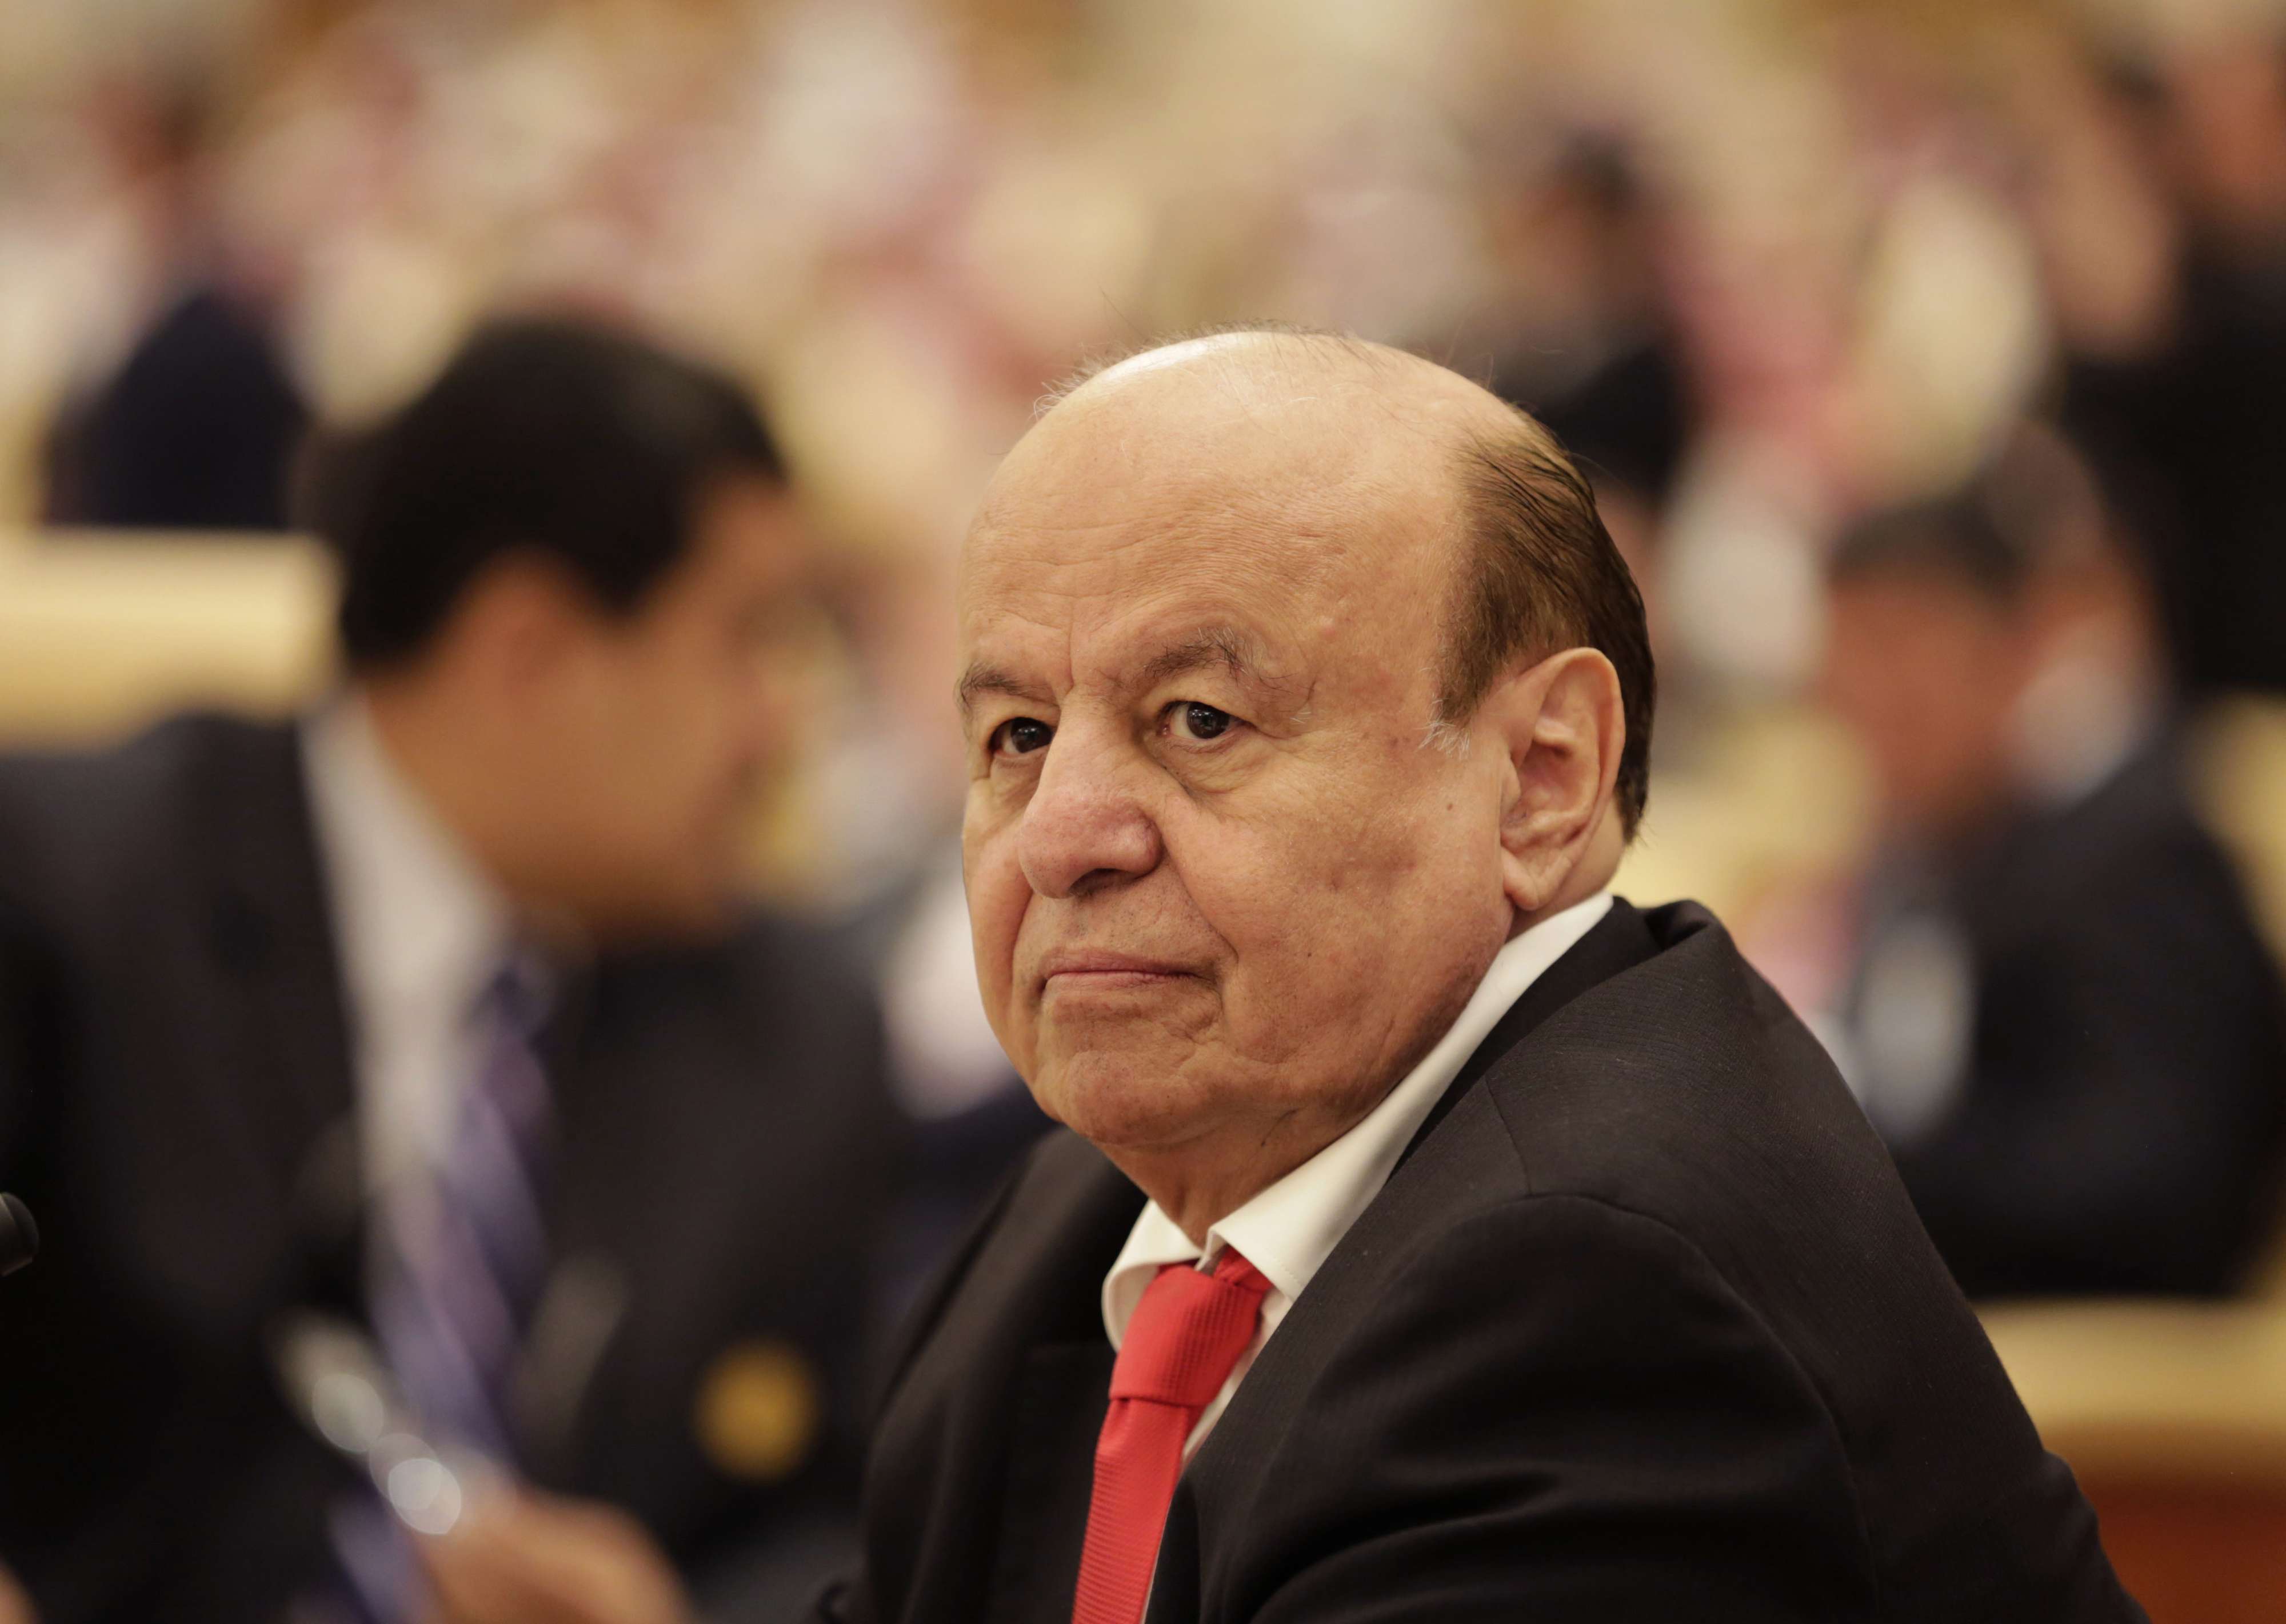 The President of Yemen, Abed Rabbo Mansour Hadi